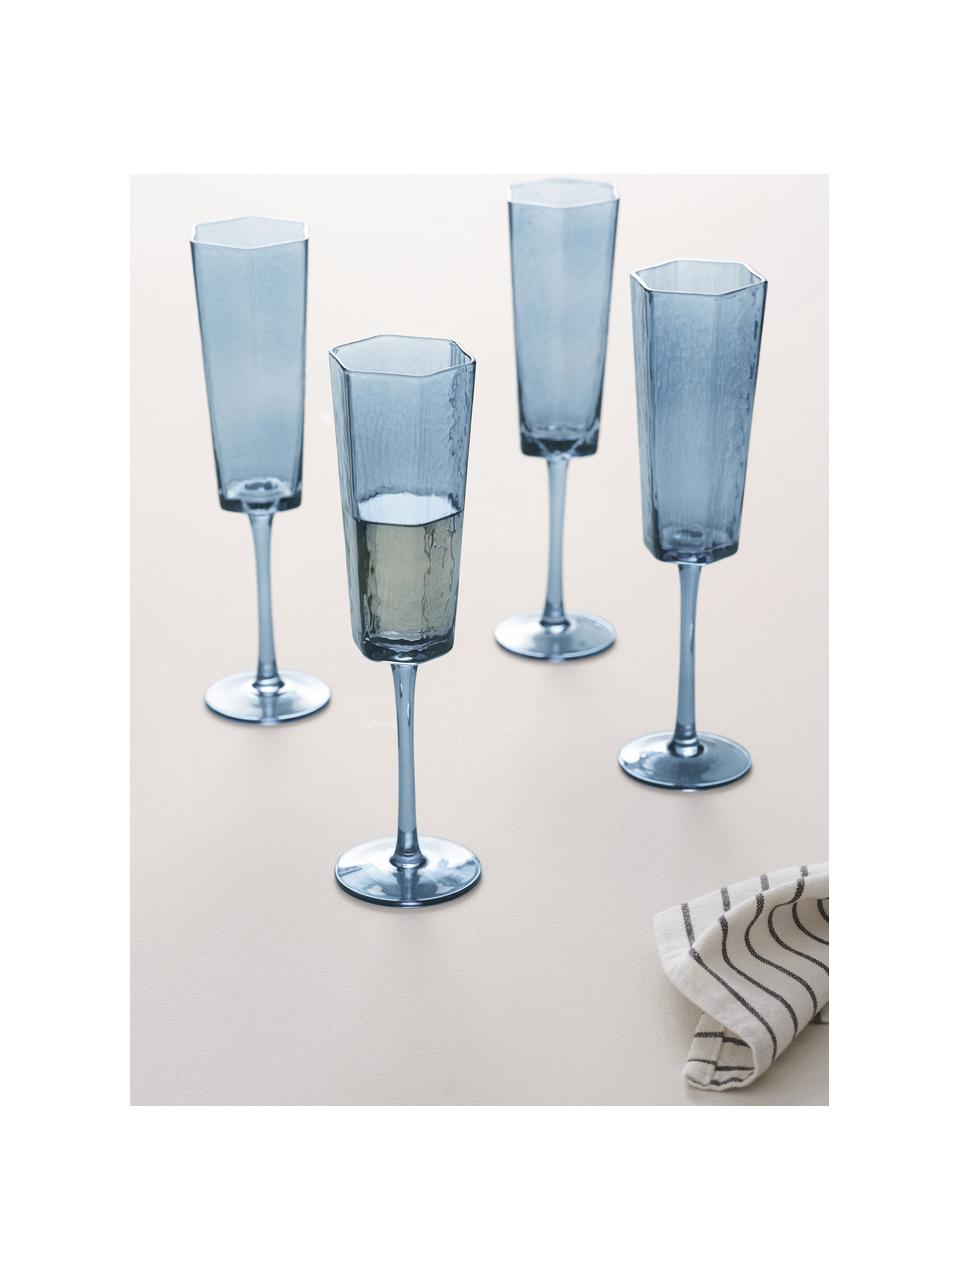 Champagneglas Amory in blauw, 4 stuks, Glas, Blauw, transparant, Ø 6 x H 26 cm, 230 ml